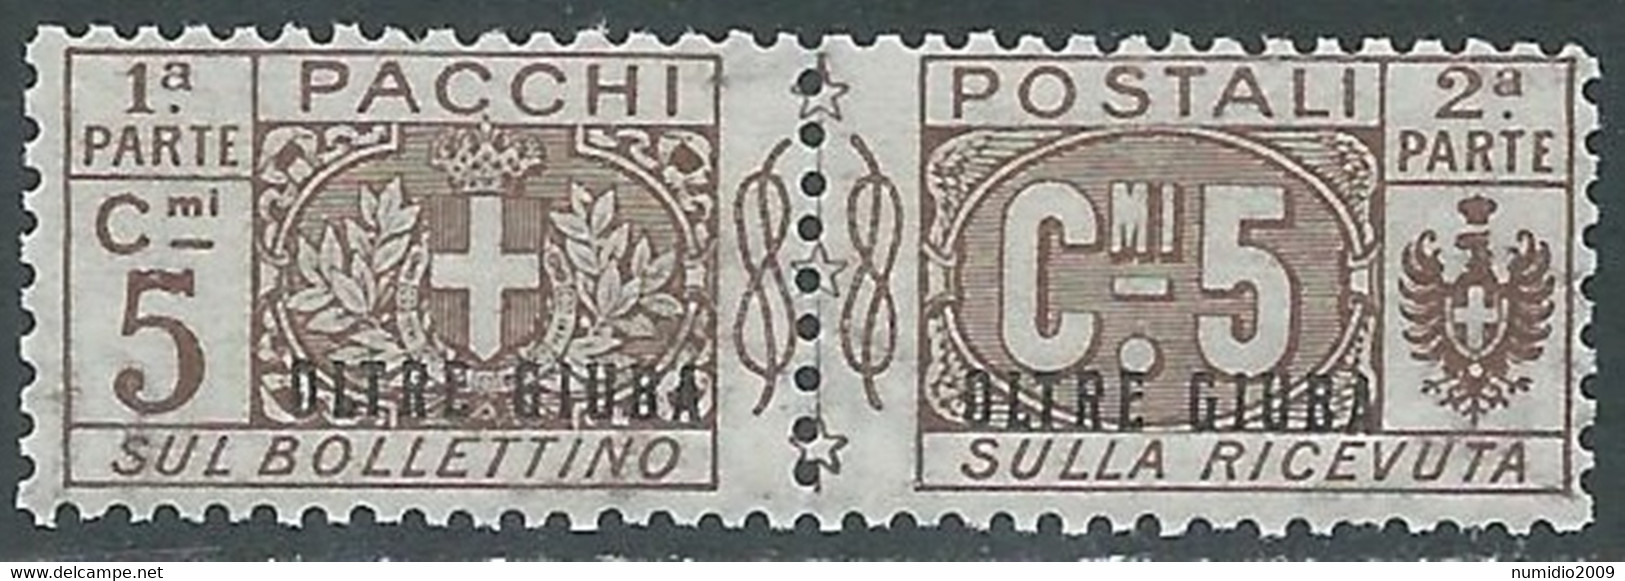 1925 OLTRE GIUBA PACCHI POSTALI 5 CENT MNH ** - RF46-2 - Oltre Giuba